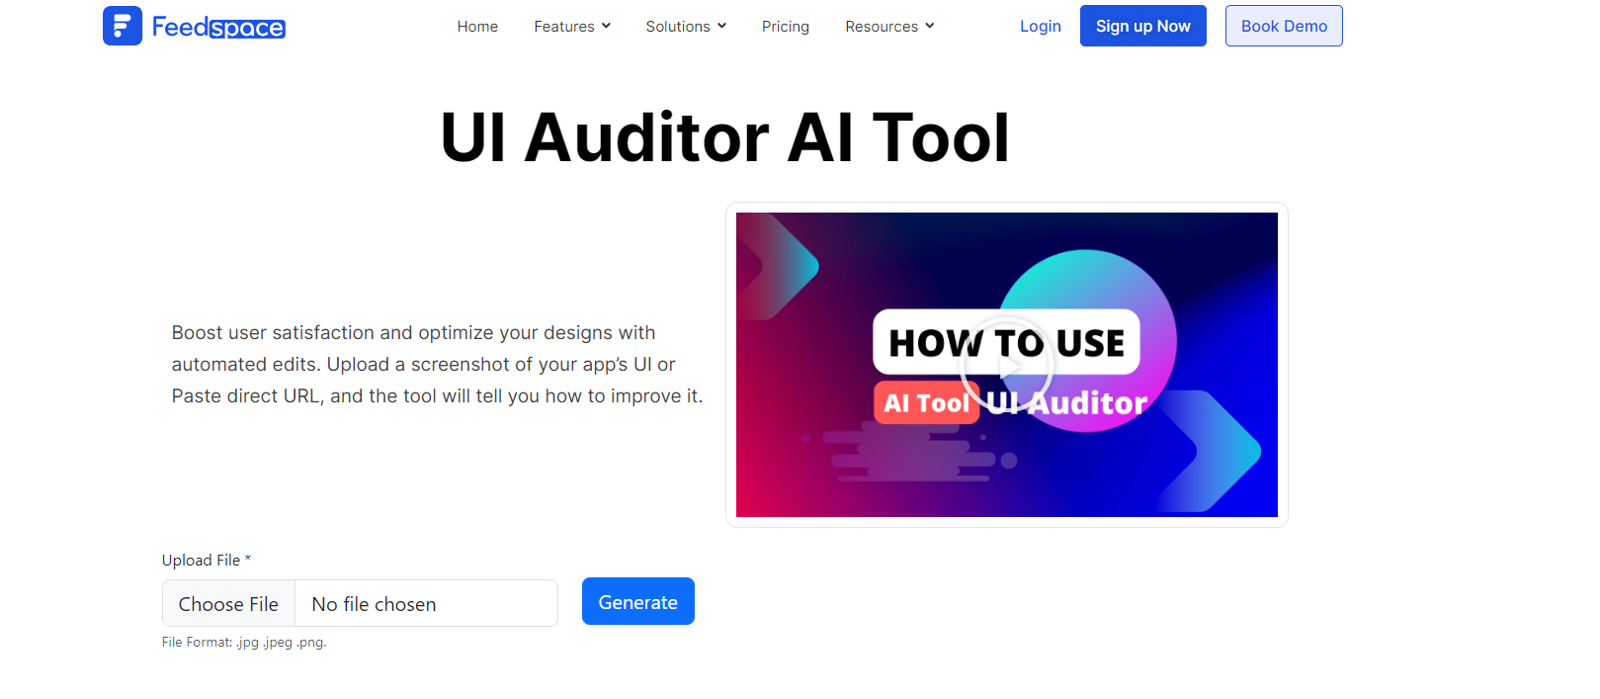 UI Auditor AI Tool website